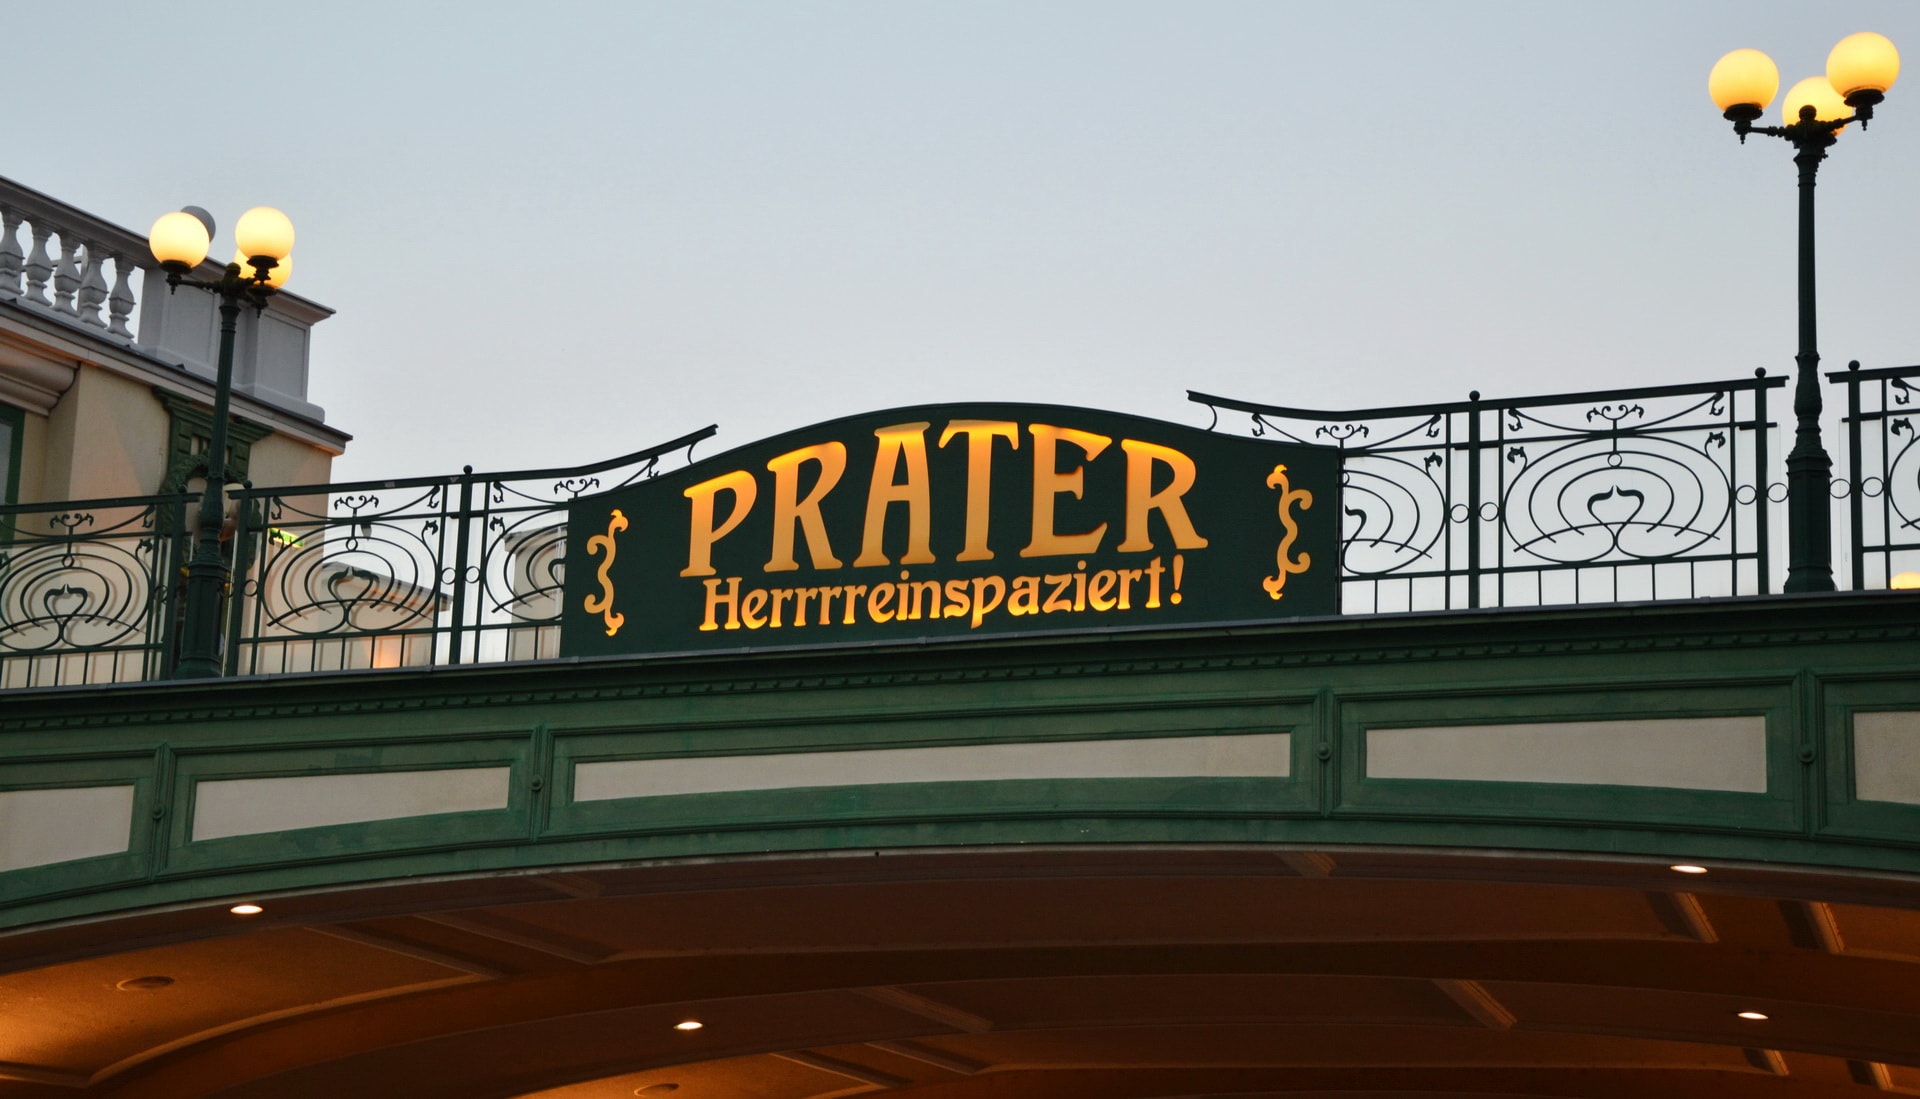 Entering the Prater amusement park in Vienna